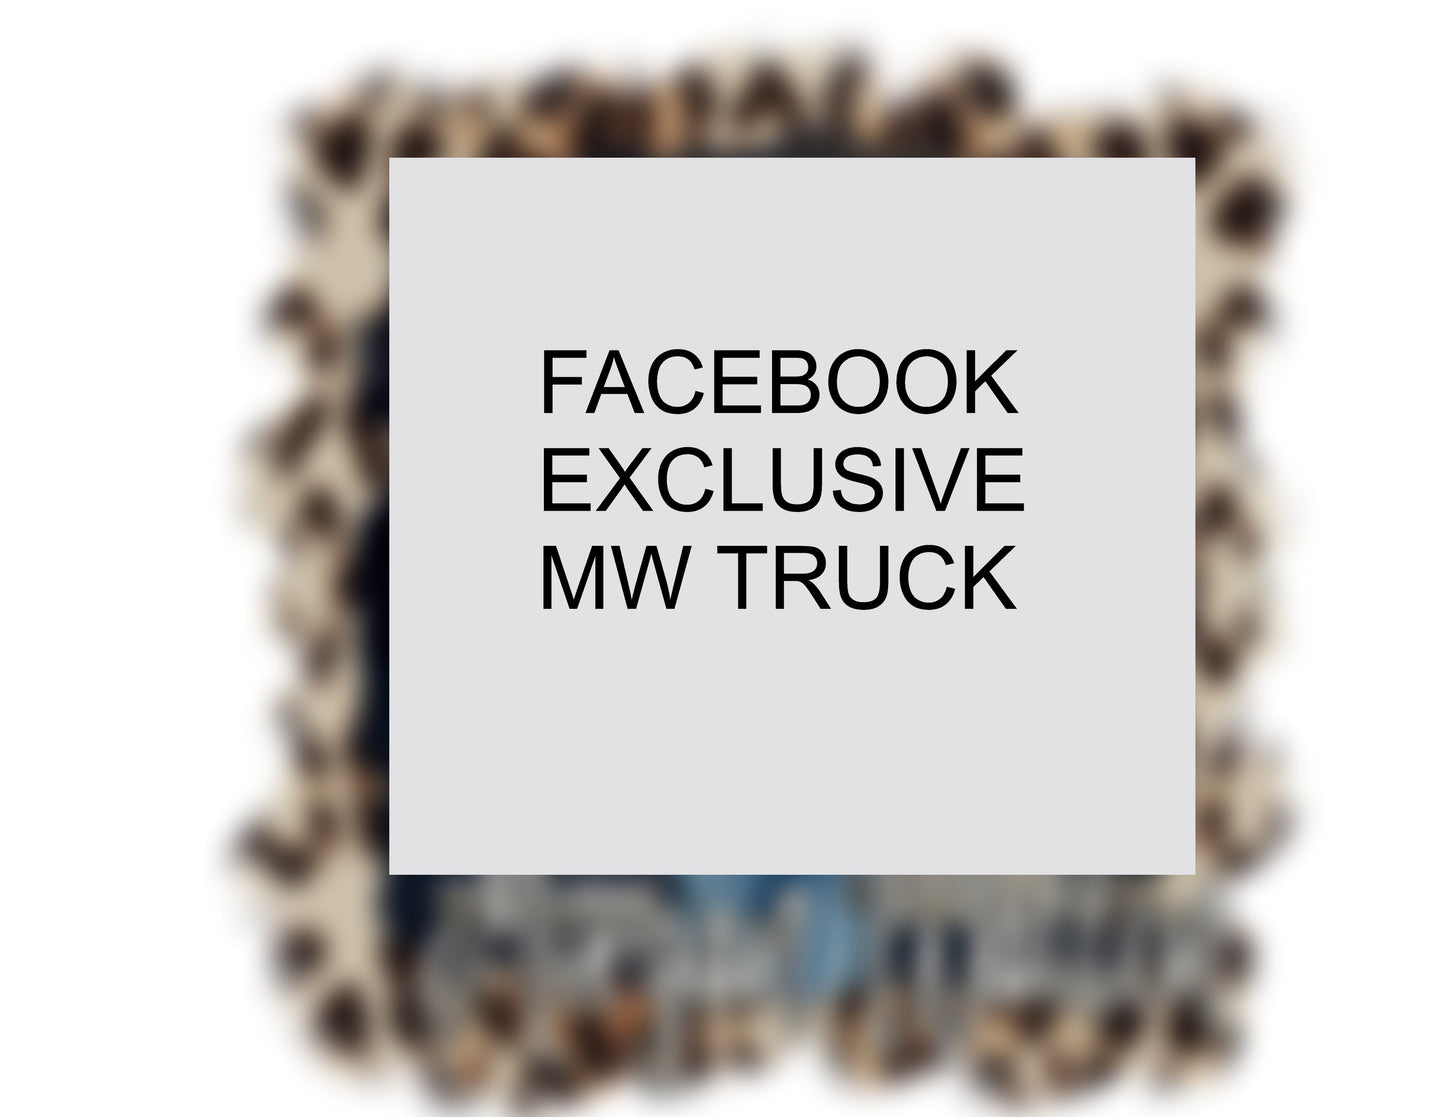 Facebook exclusive mw truck